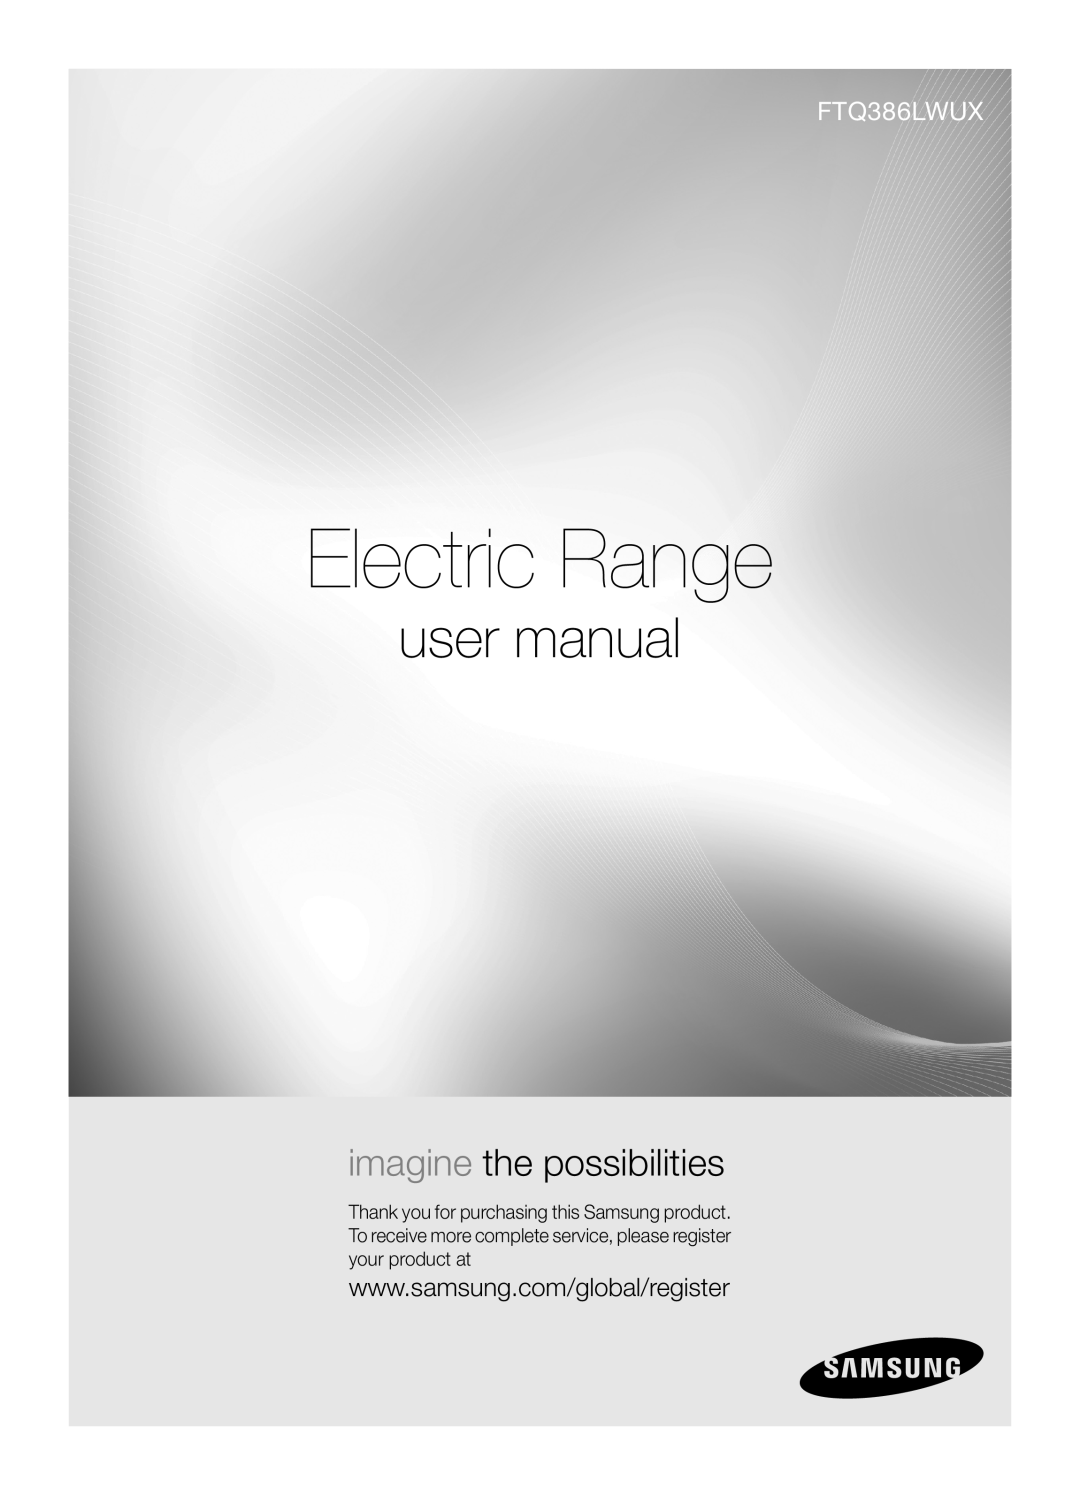 Samsung FTQ386LWUX user manual Electric Range, imagine the possibilities 